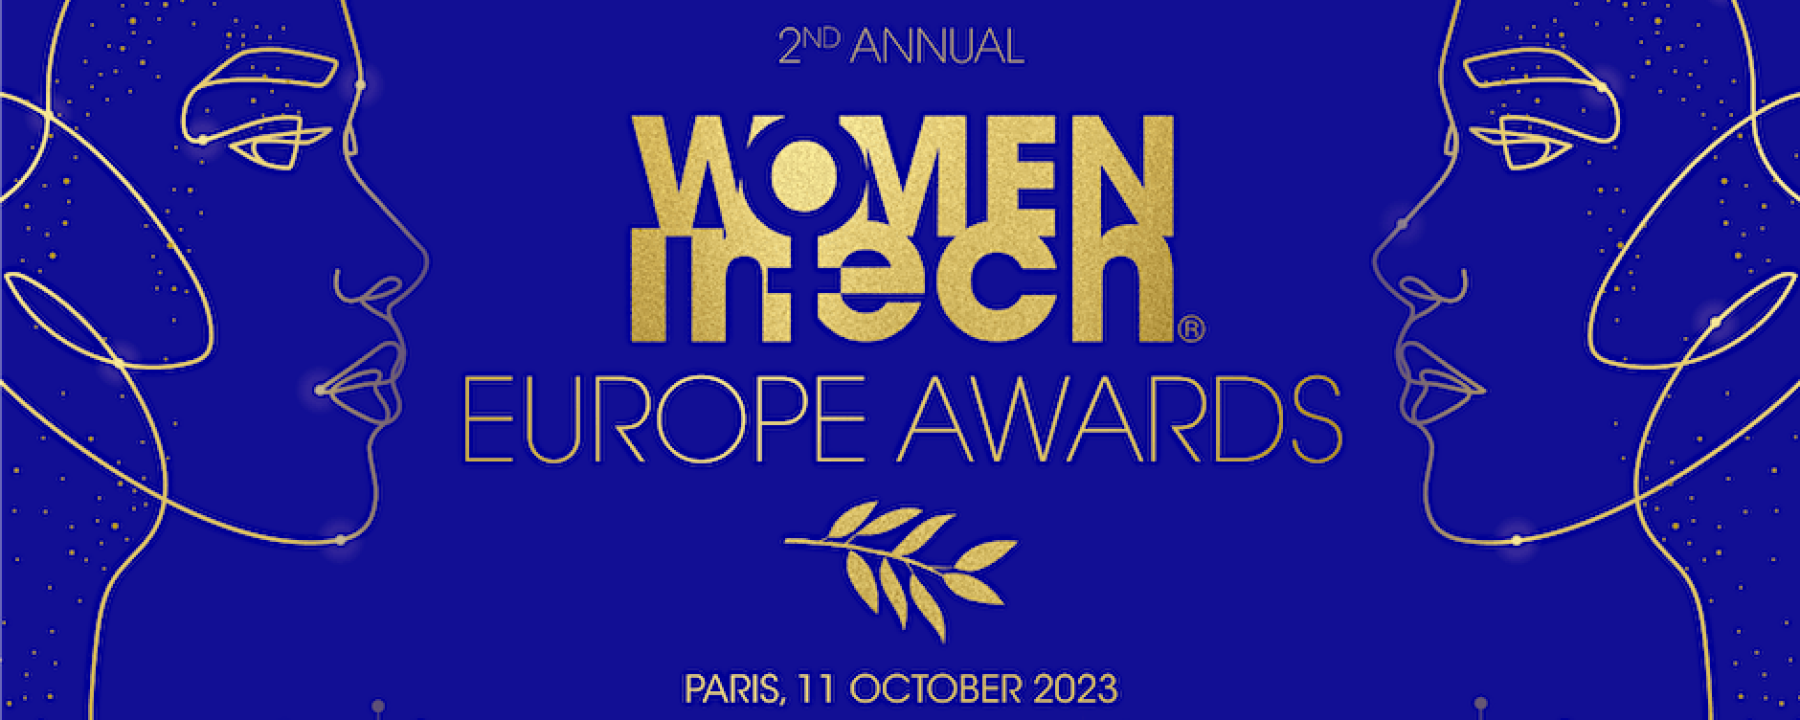 Women in Tech Europe Awards